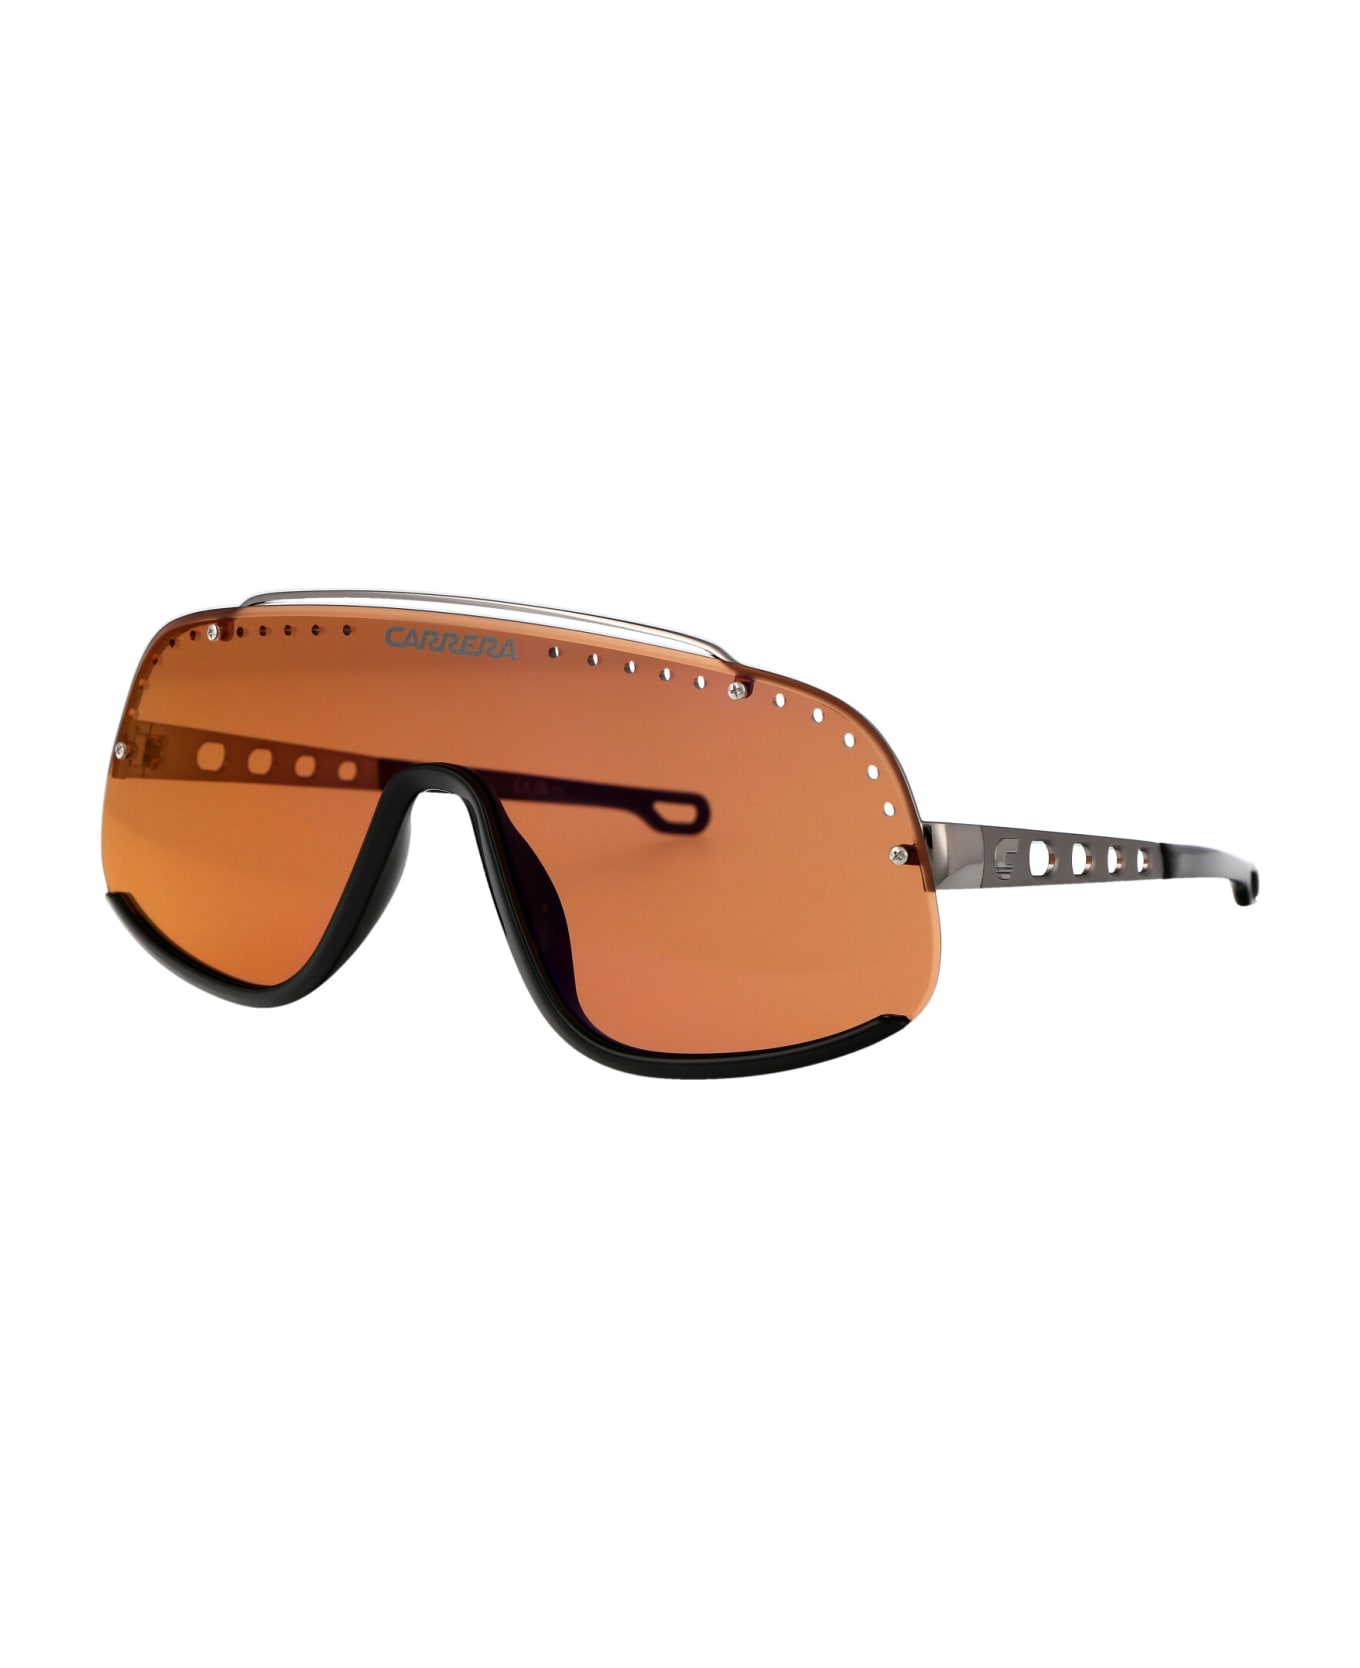 Carrera Flaglab 16 Sunglasses - 8IJDP ORN RUT サングラス